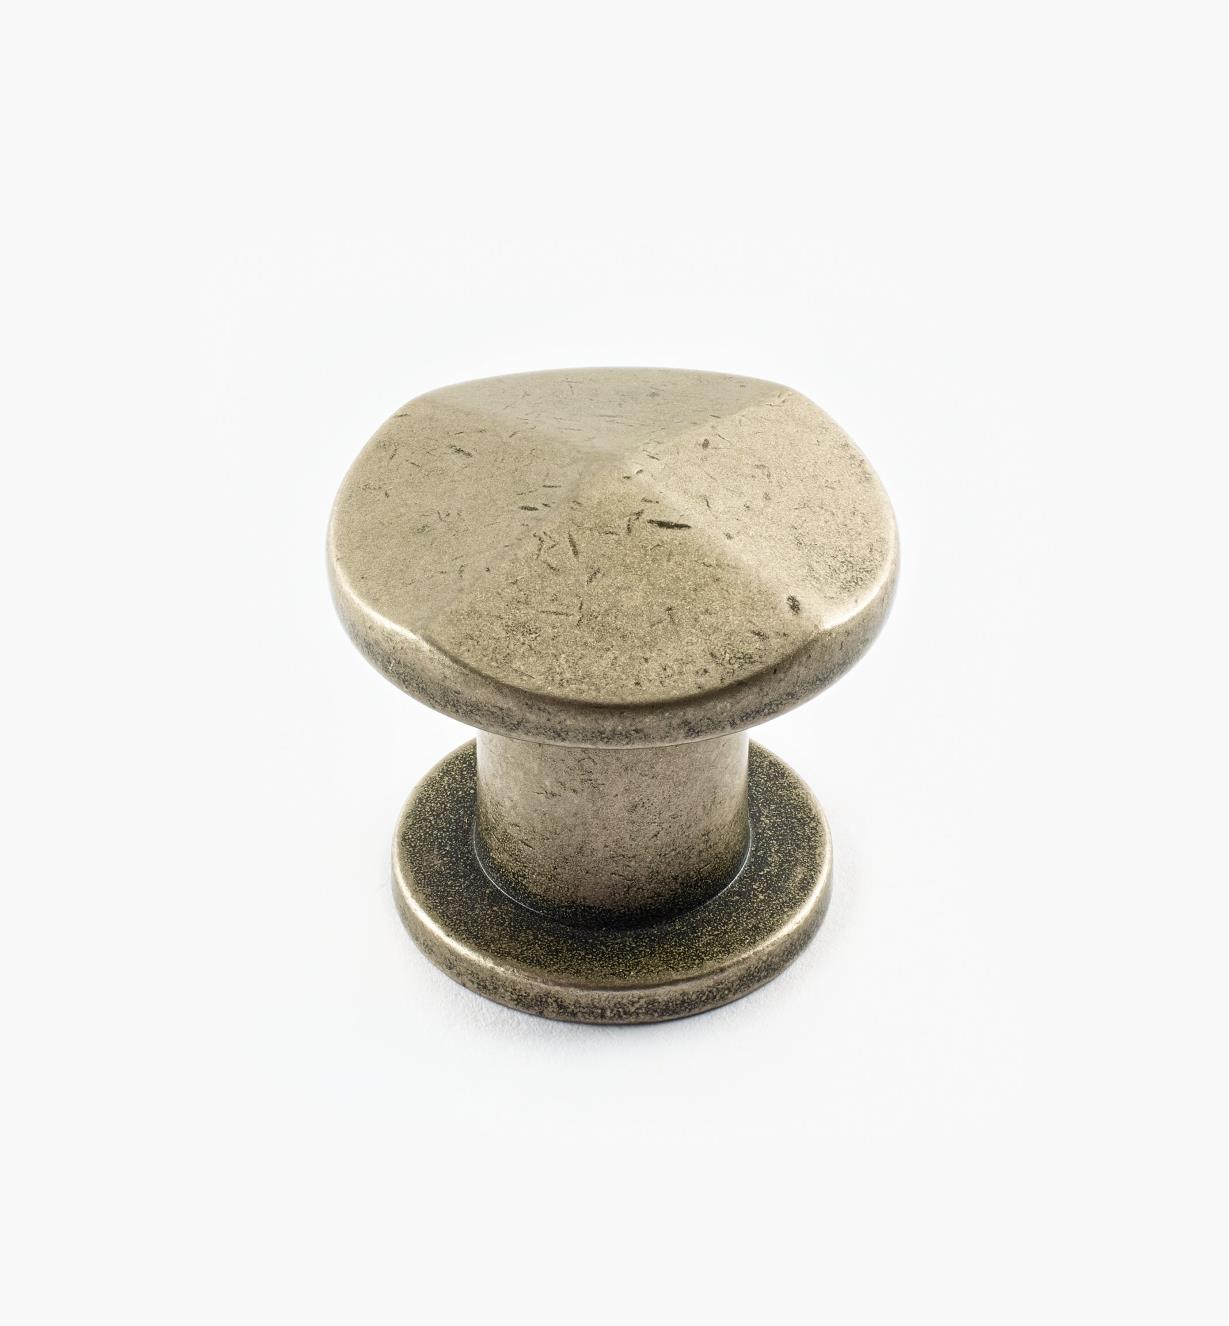 02A1510 - Bouton à face pyramidale de 30 mm x 27 mm, série Galleria, nickel antique